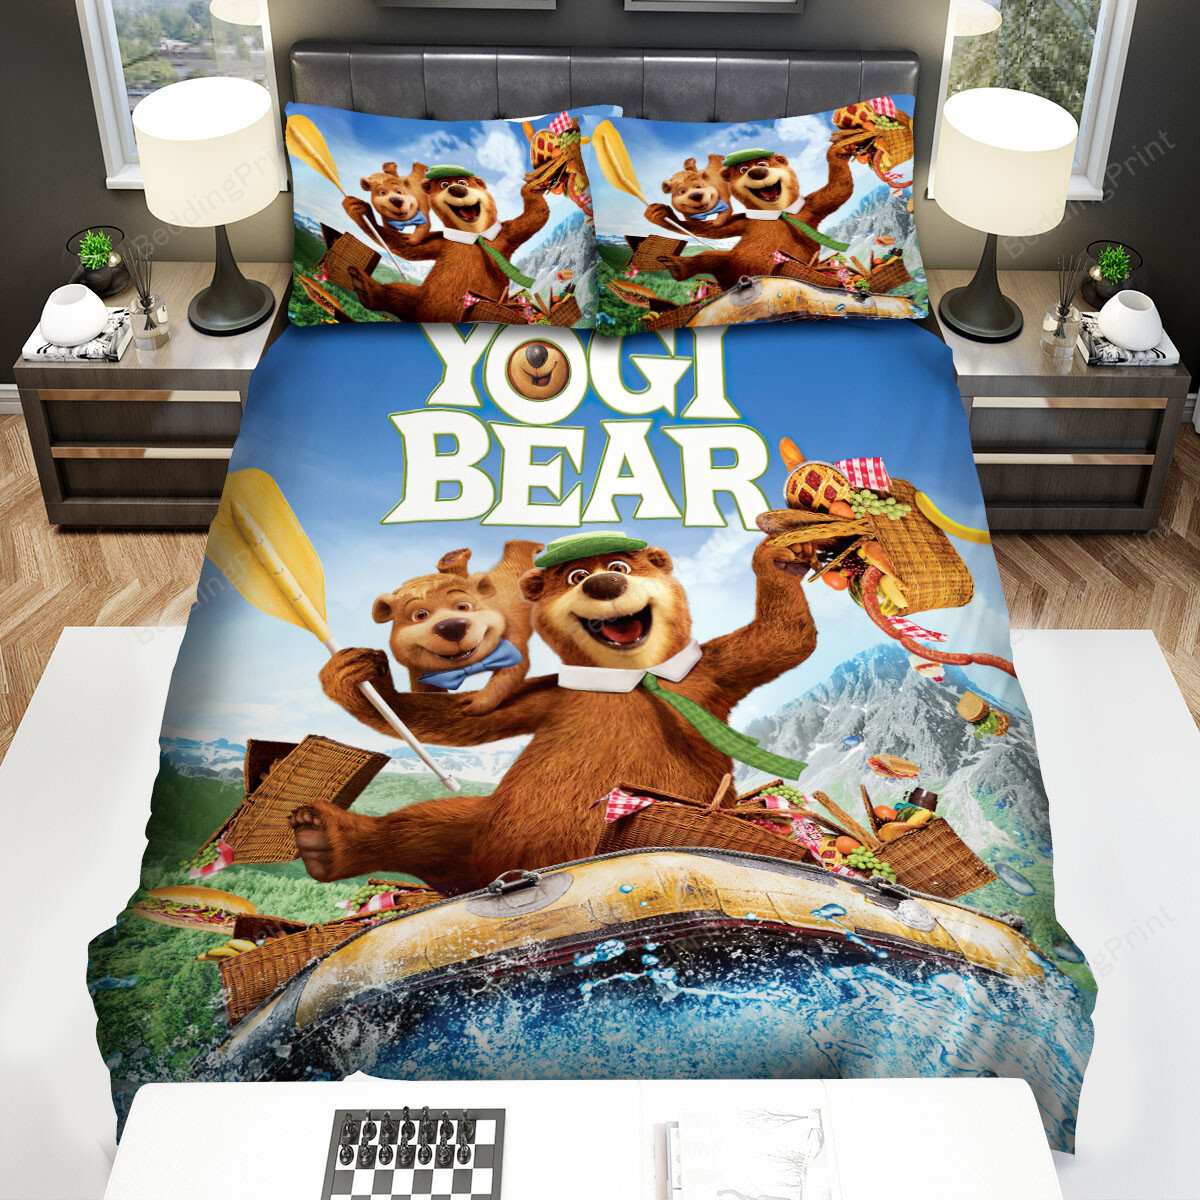 Yogi Bear The Movie Original Poster Bed Sheets Spread Duvet Cover Bedding Sets